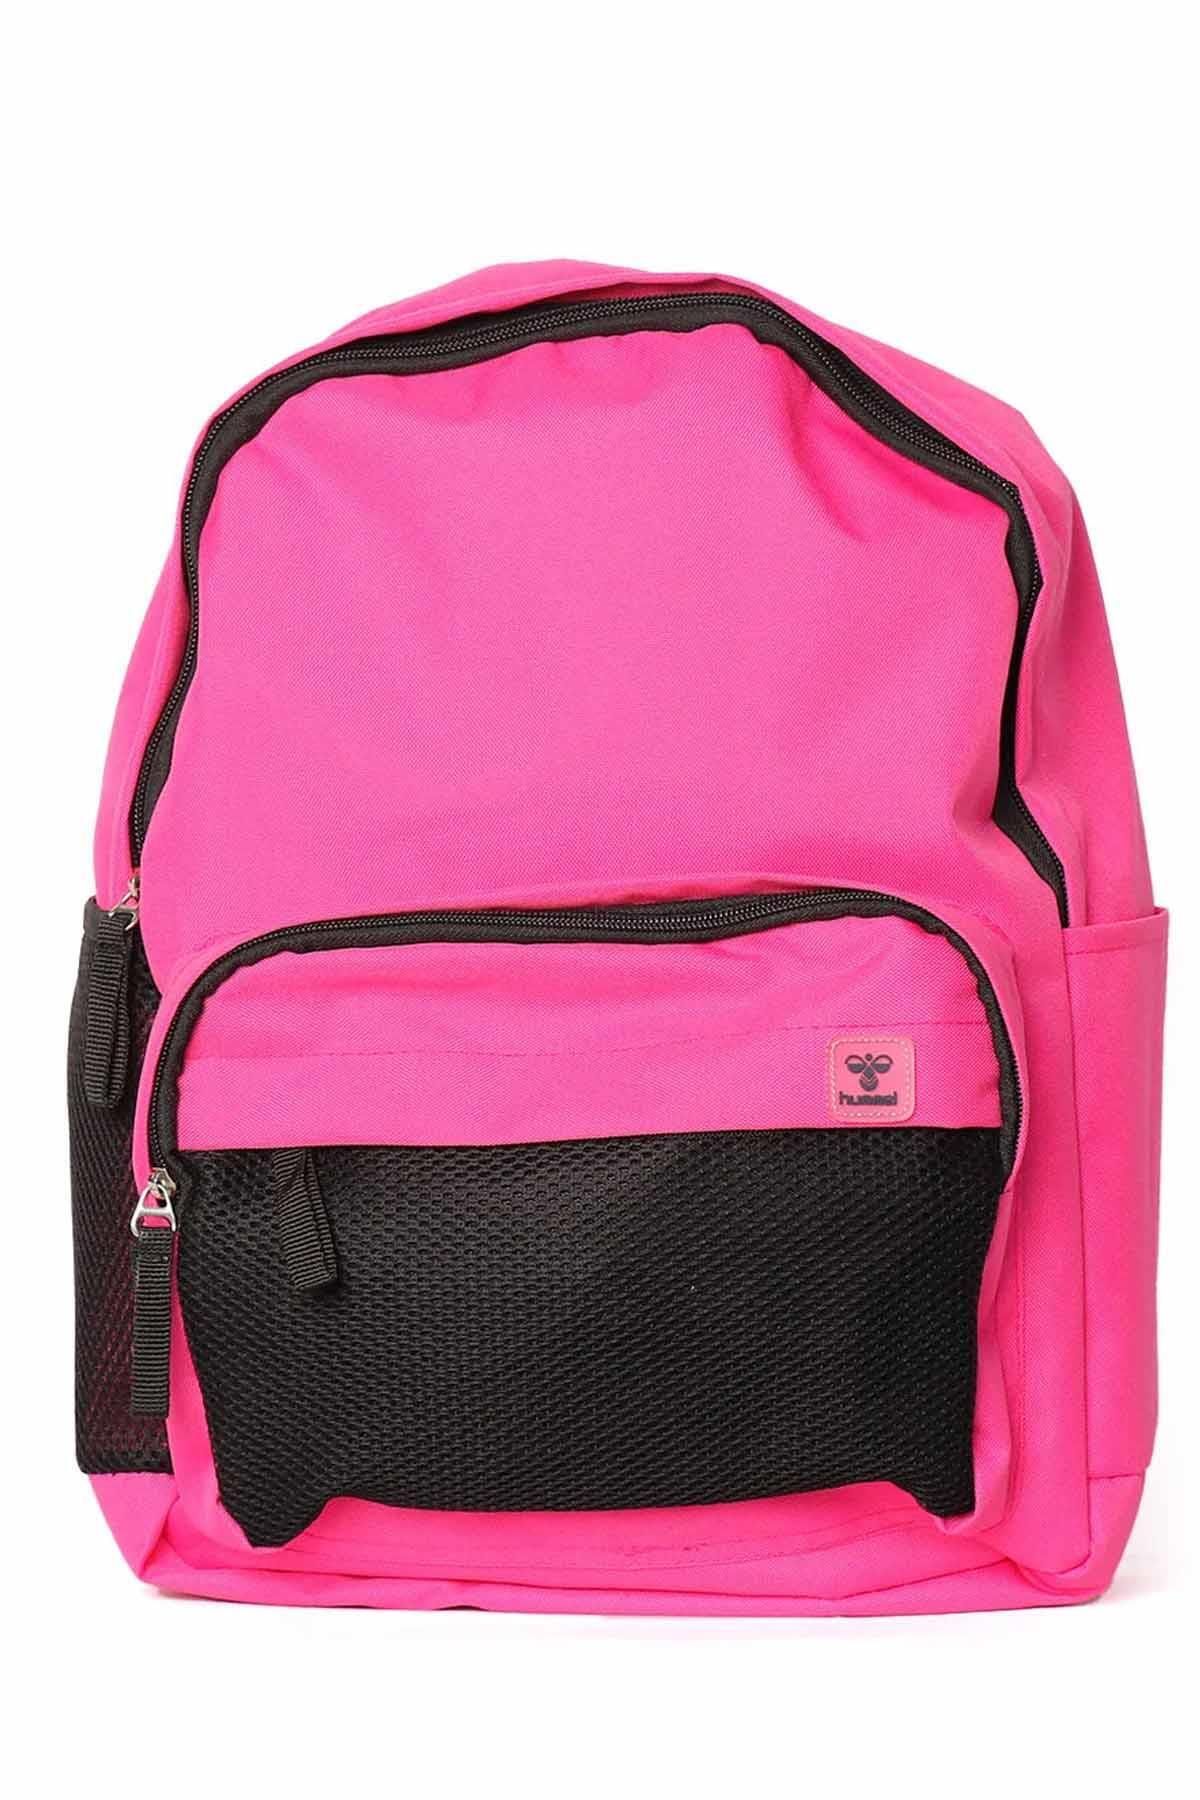 hummel Back and School Bag B1 یونیسکس Backpack 980230-9855-1 صورتی